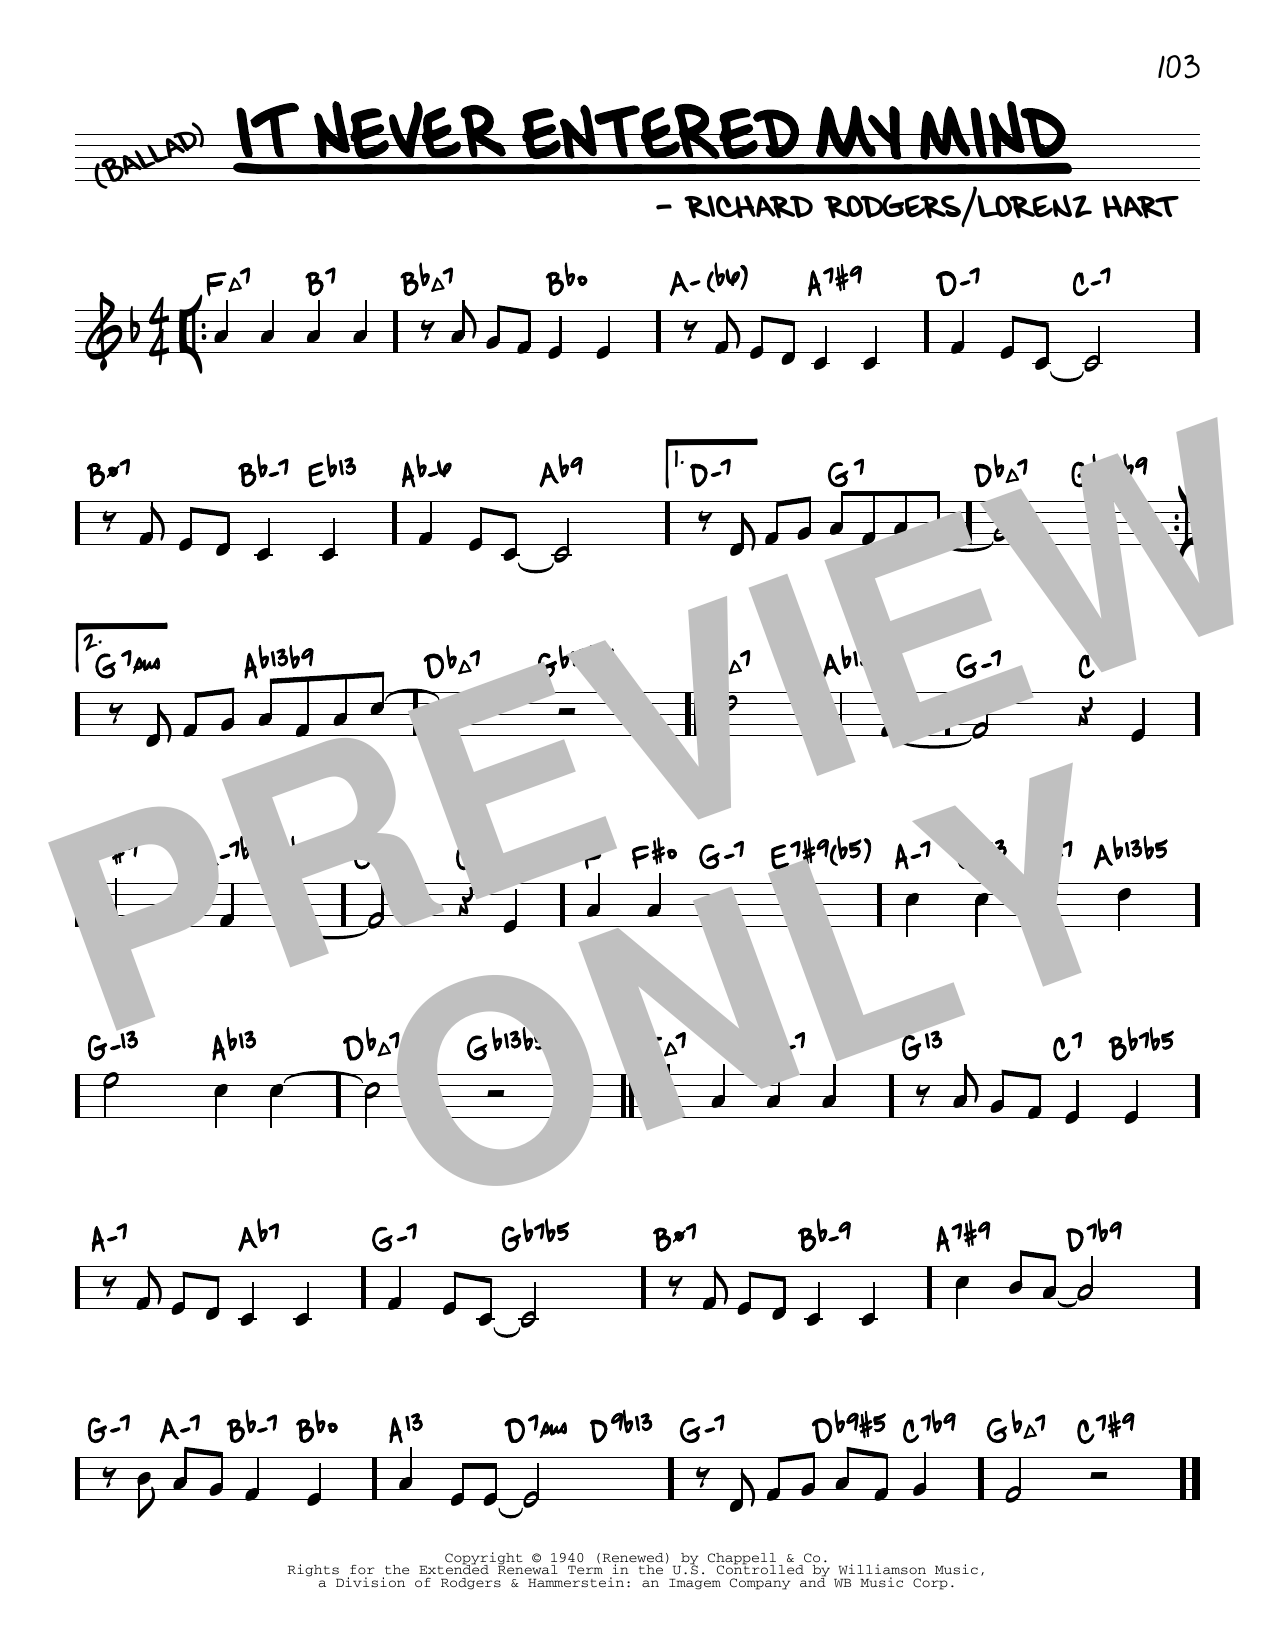 Rodgers & Hart It Never Entered My Mind (arr. David Hazeltine) Sheet Music Notes & Chords for Real Book – Enhanced Chords - Download or Print PDF